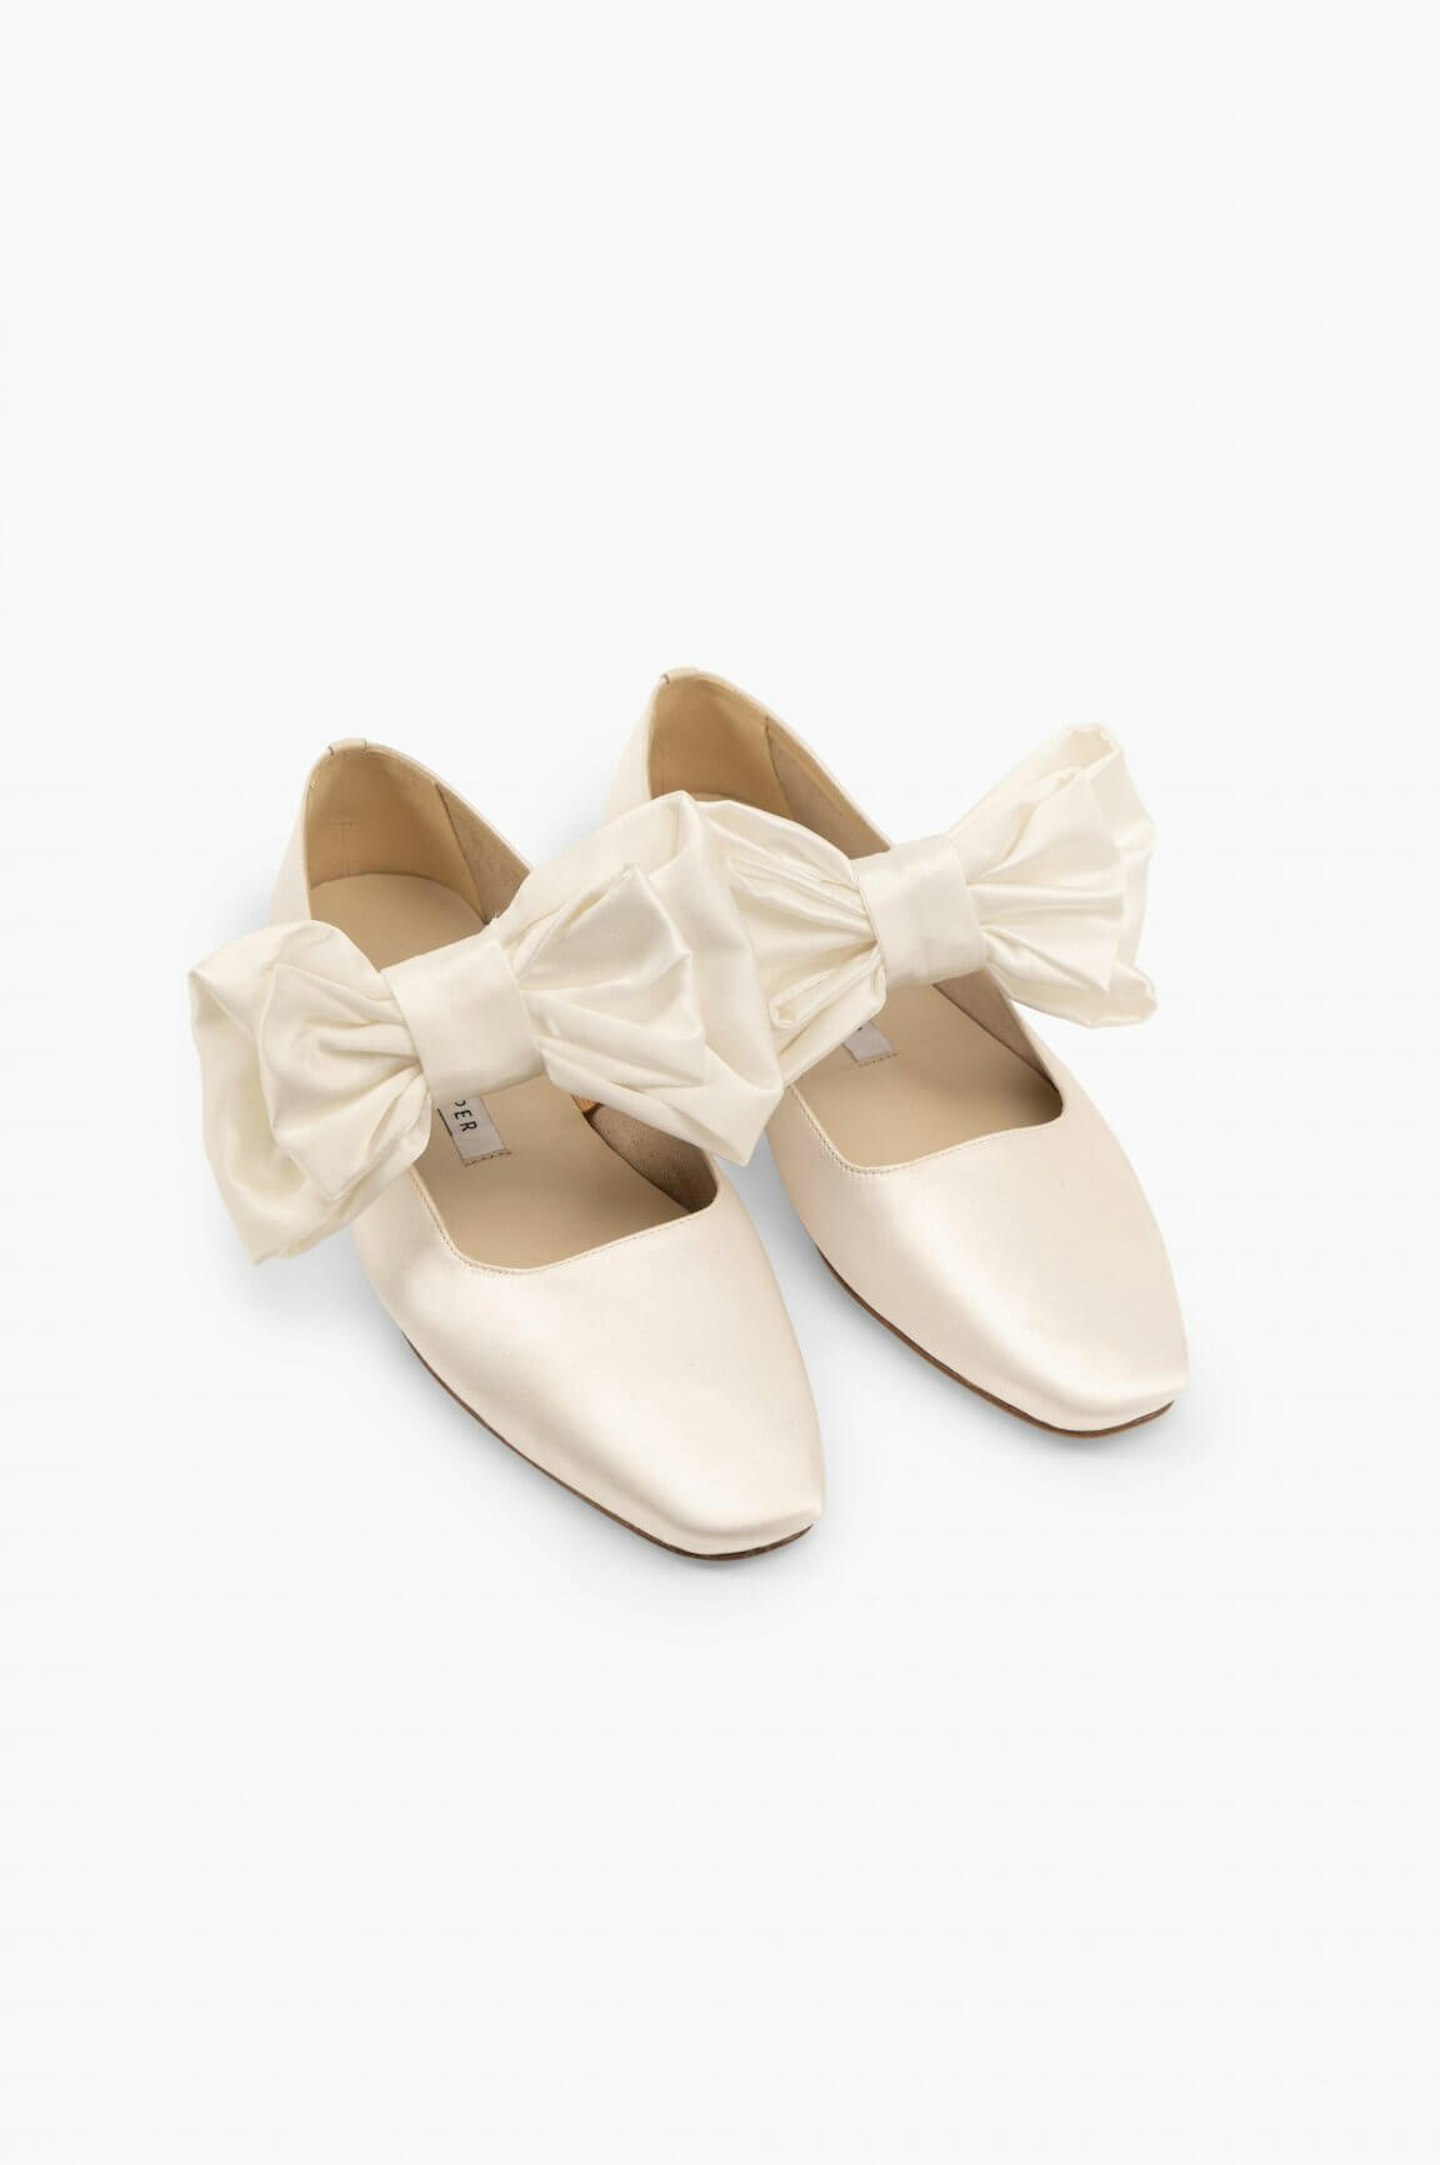 Monday – Sleeper, Satin Ballet Flats with Detachable Bows, £187